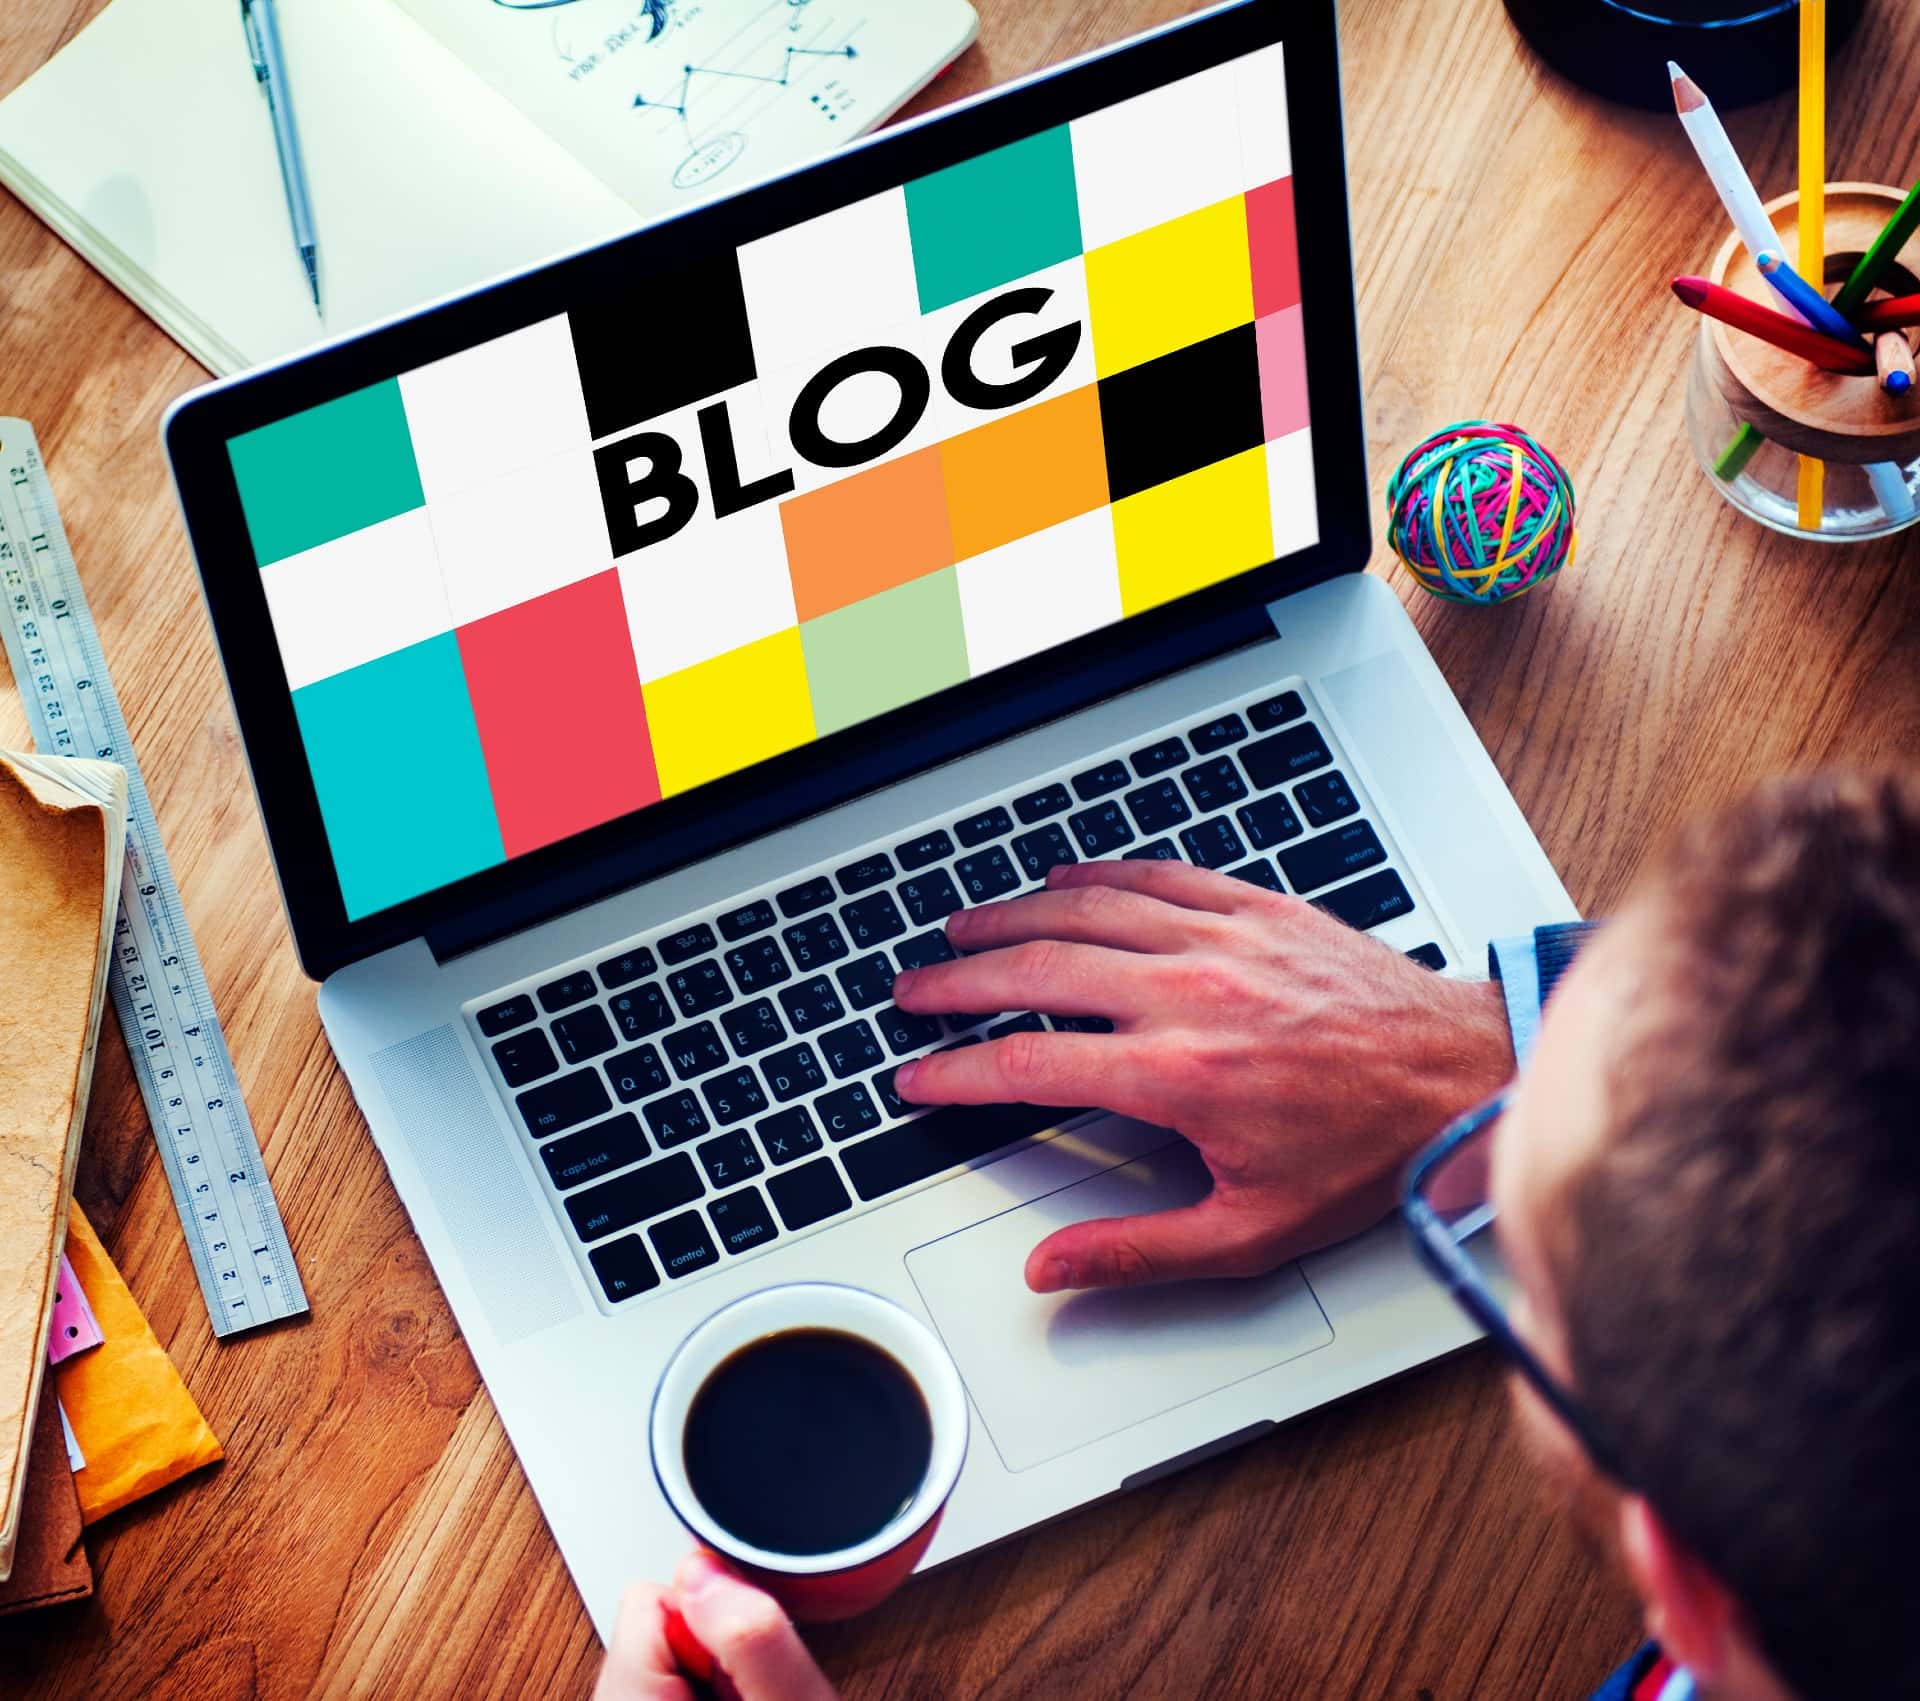 Blog blogging homepage social media network concep q6rvkg3 1 1 | page